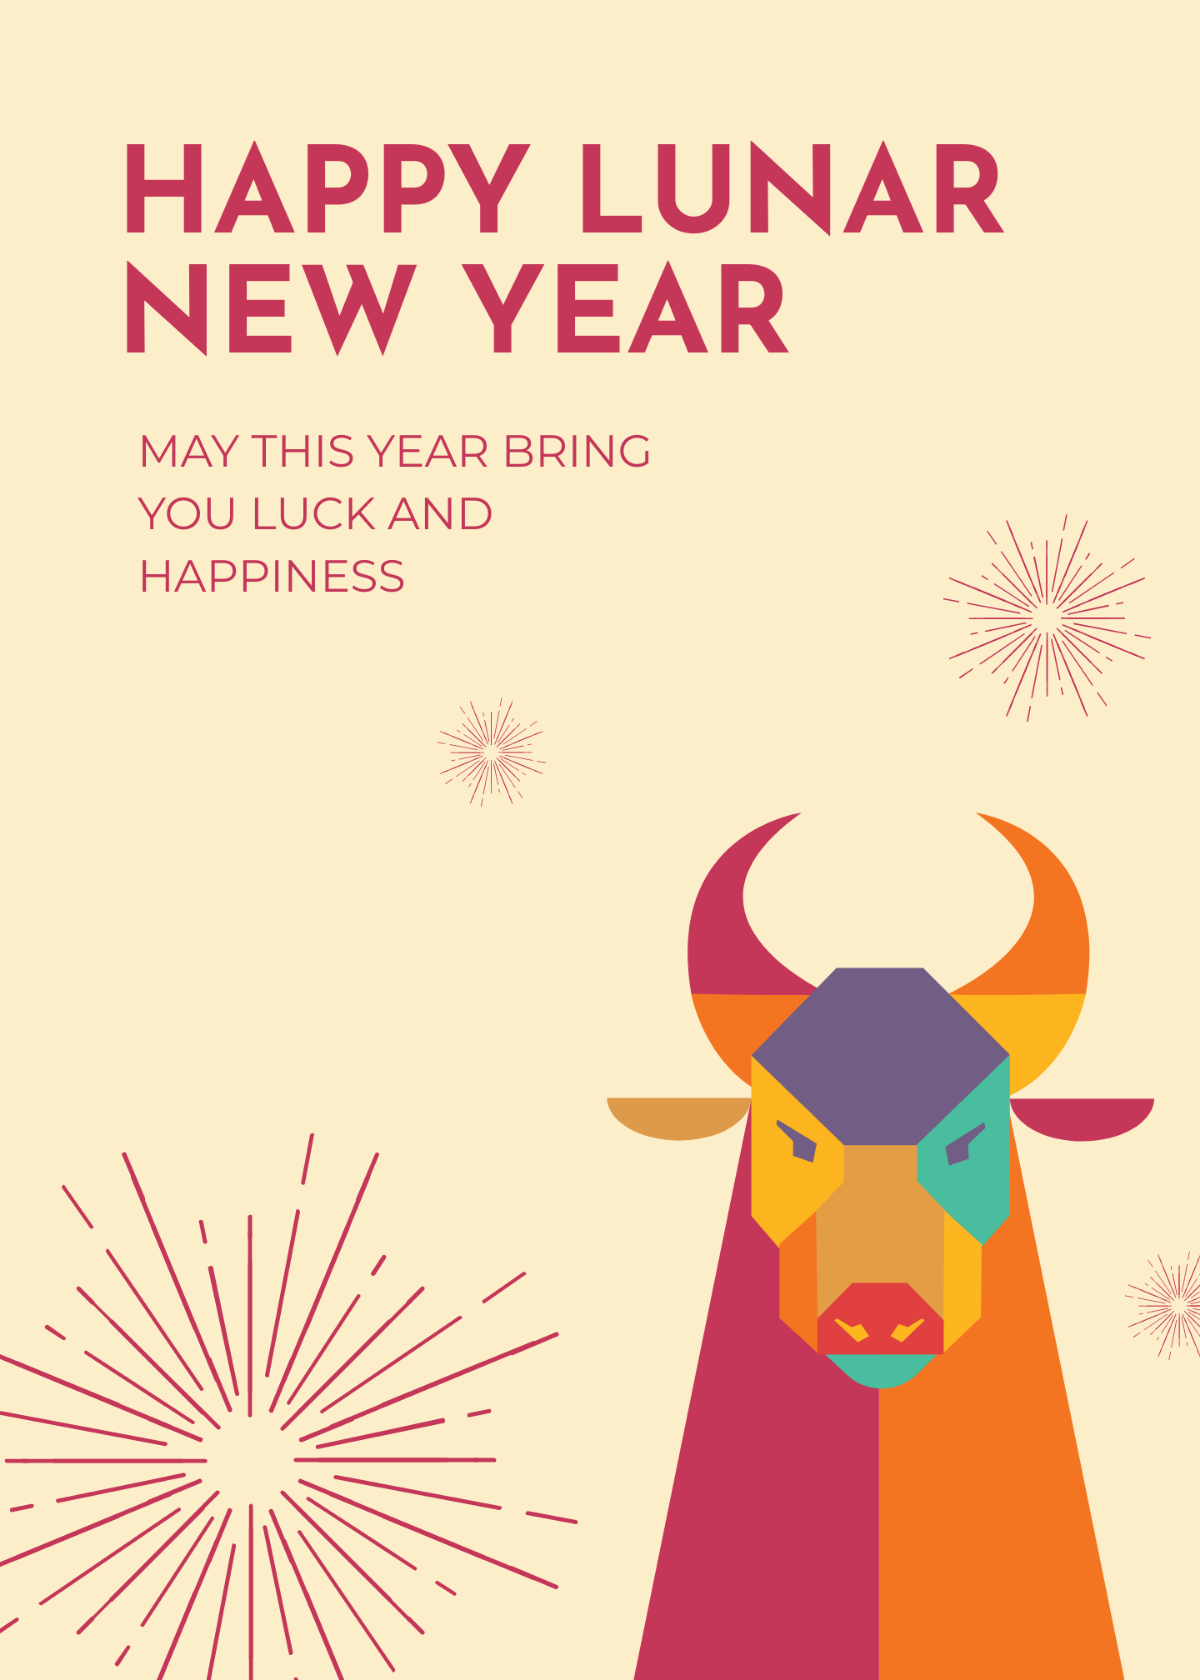 Creative Chinese New Year Card